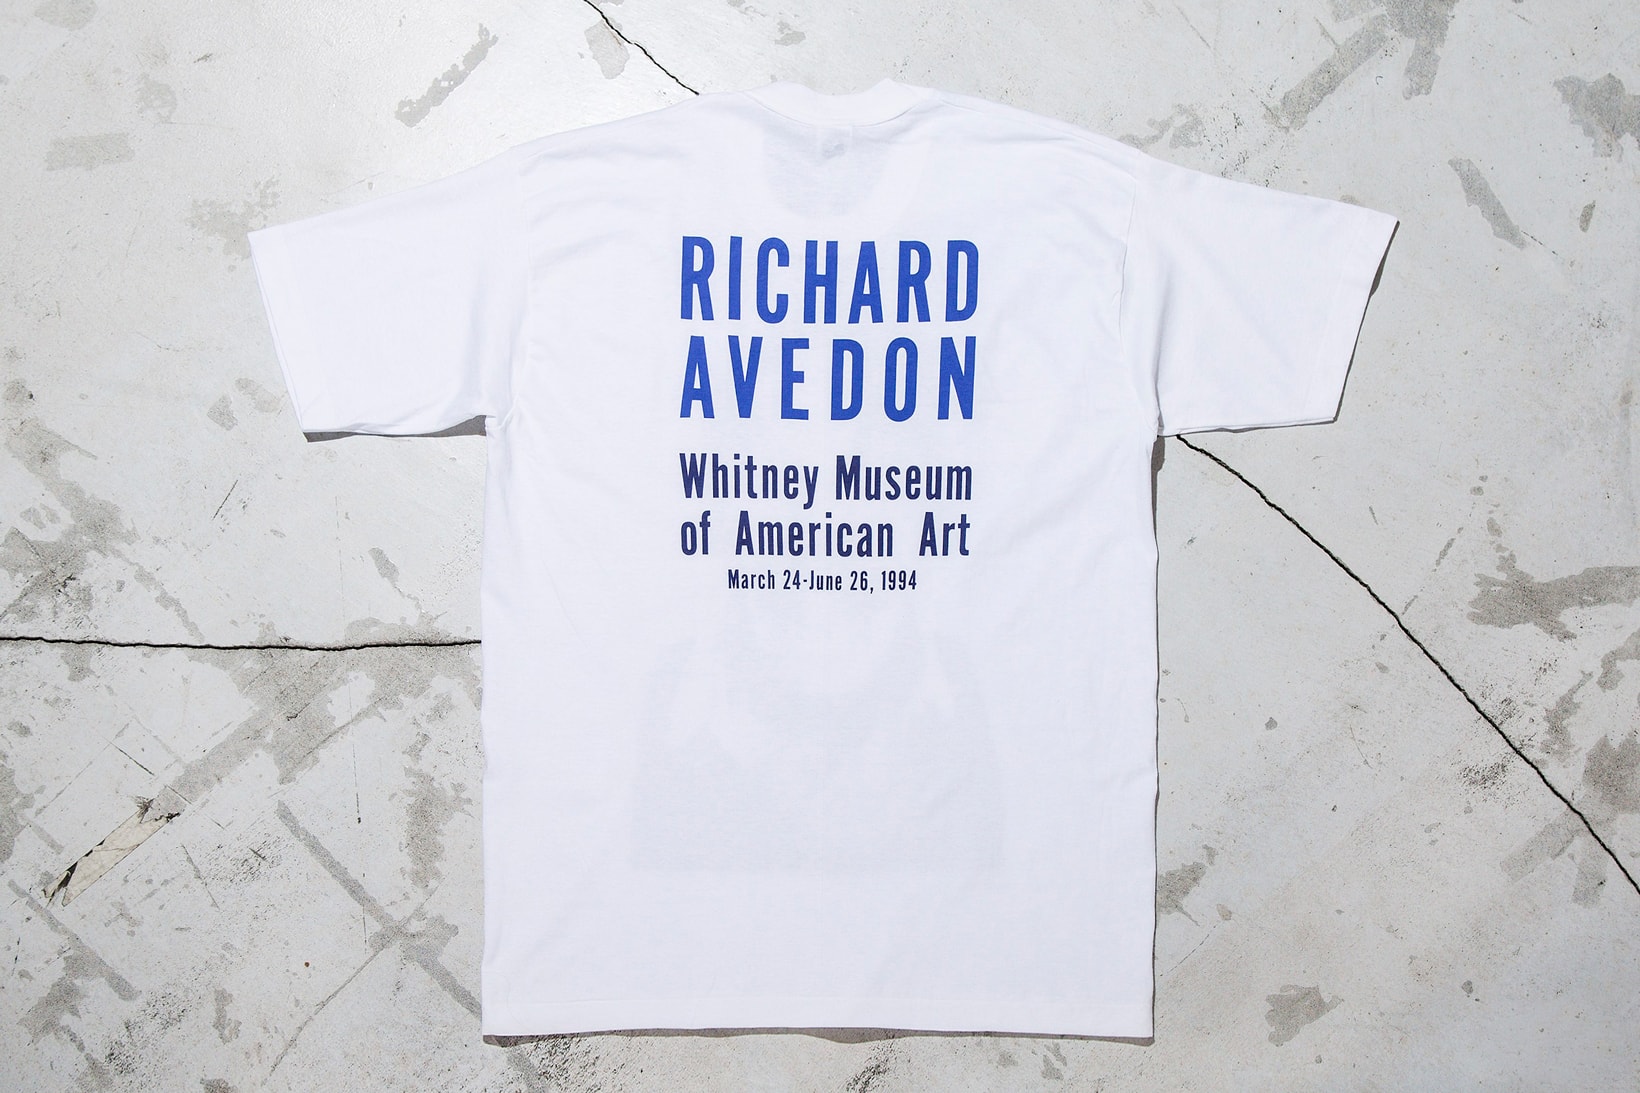 BEAUTY AND YOUTH Japan Apparel Fashion Clothing Richard Avedon Killer Joe Piro